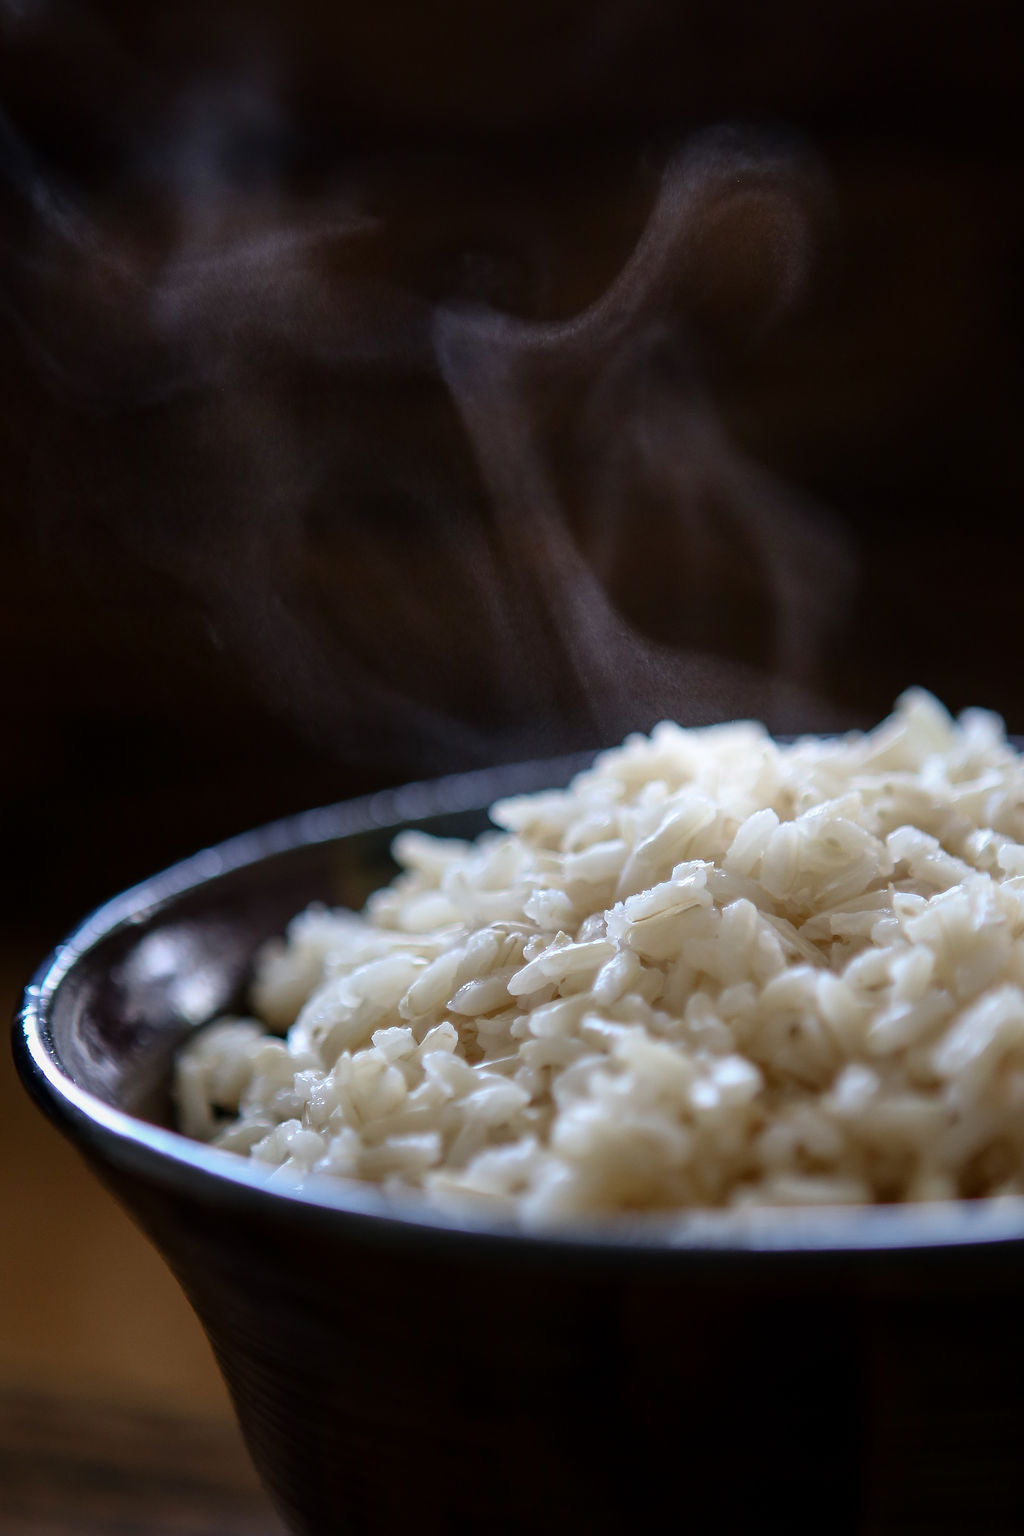 Kilombero White Long Grain Rice (500g)